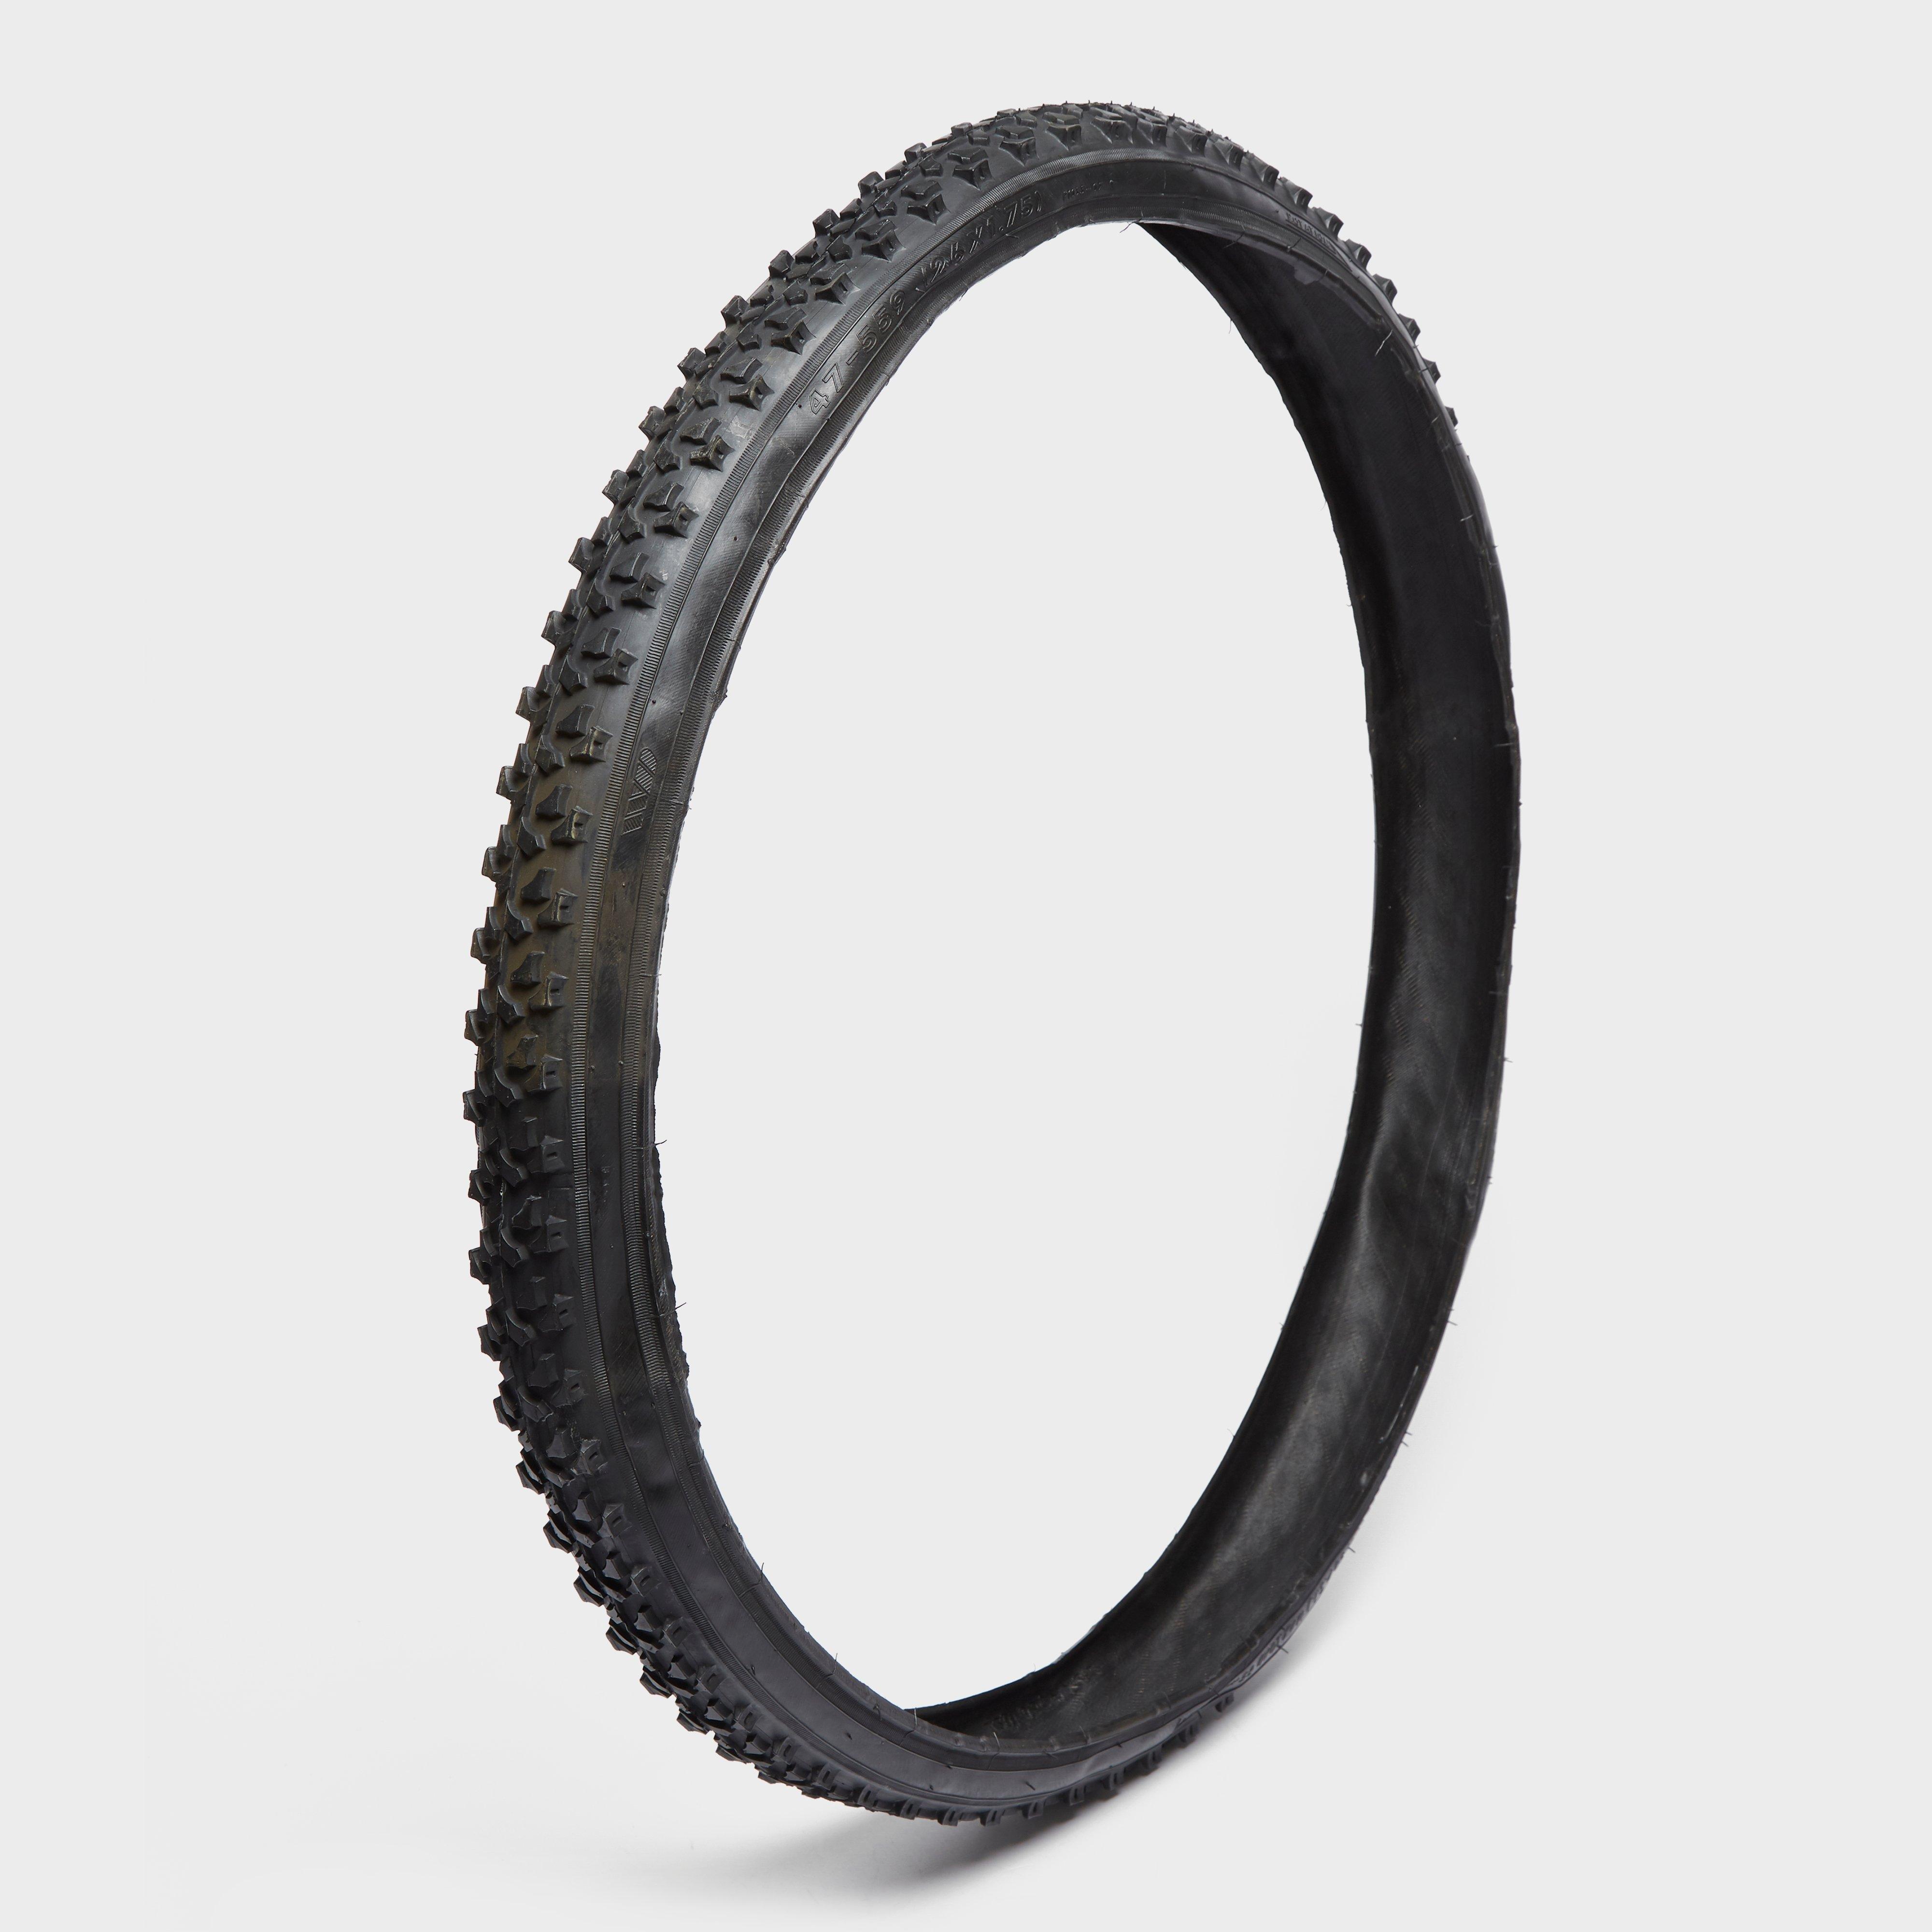 Blacks One23 26 x 1.75 Folding Mountain Bike Tyre, Black